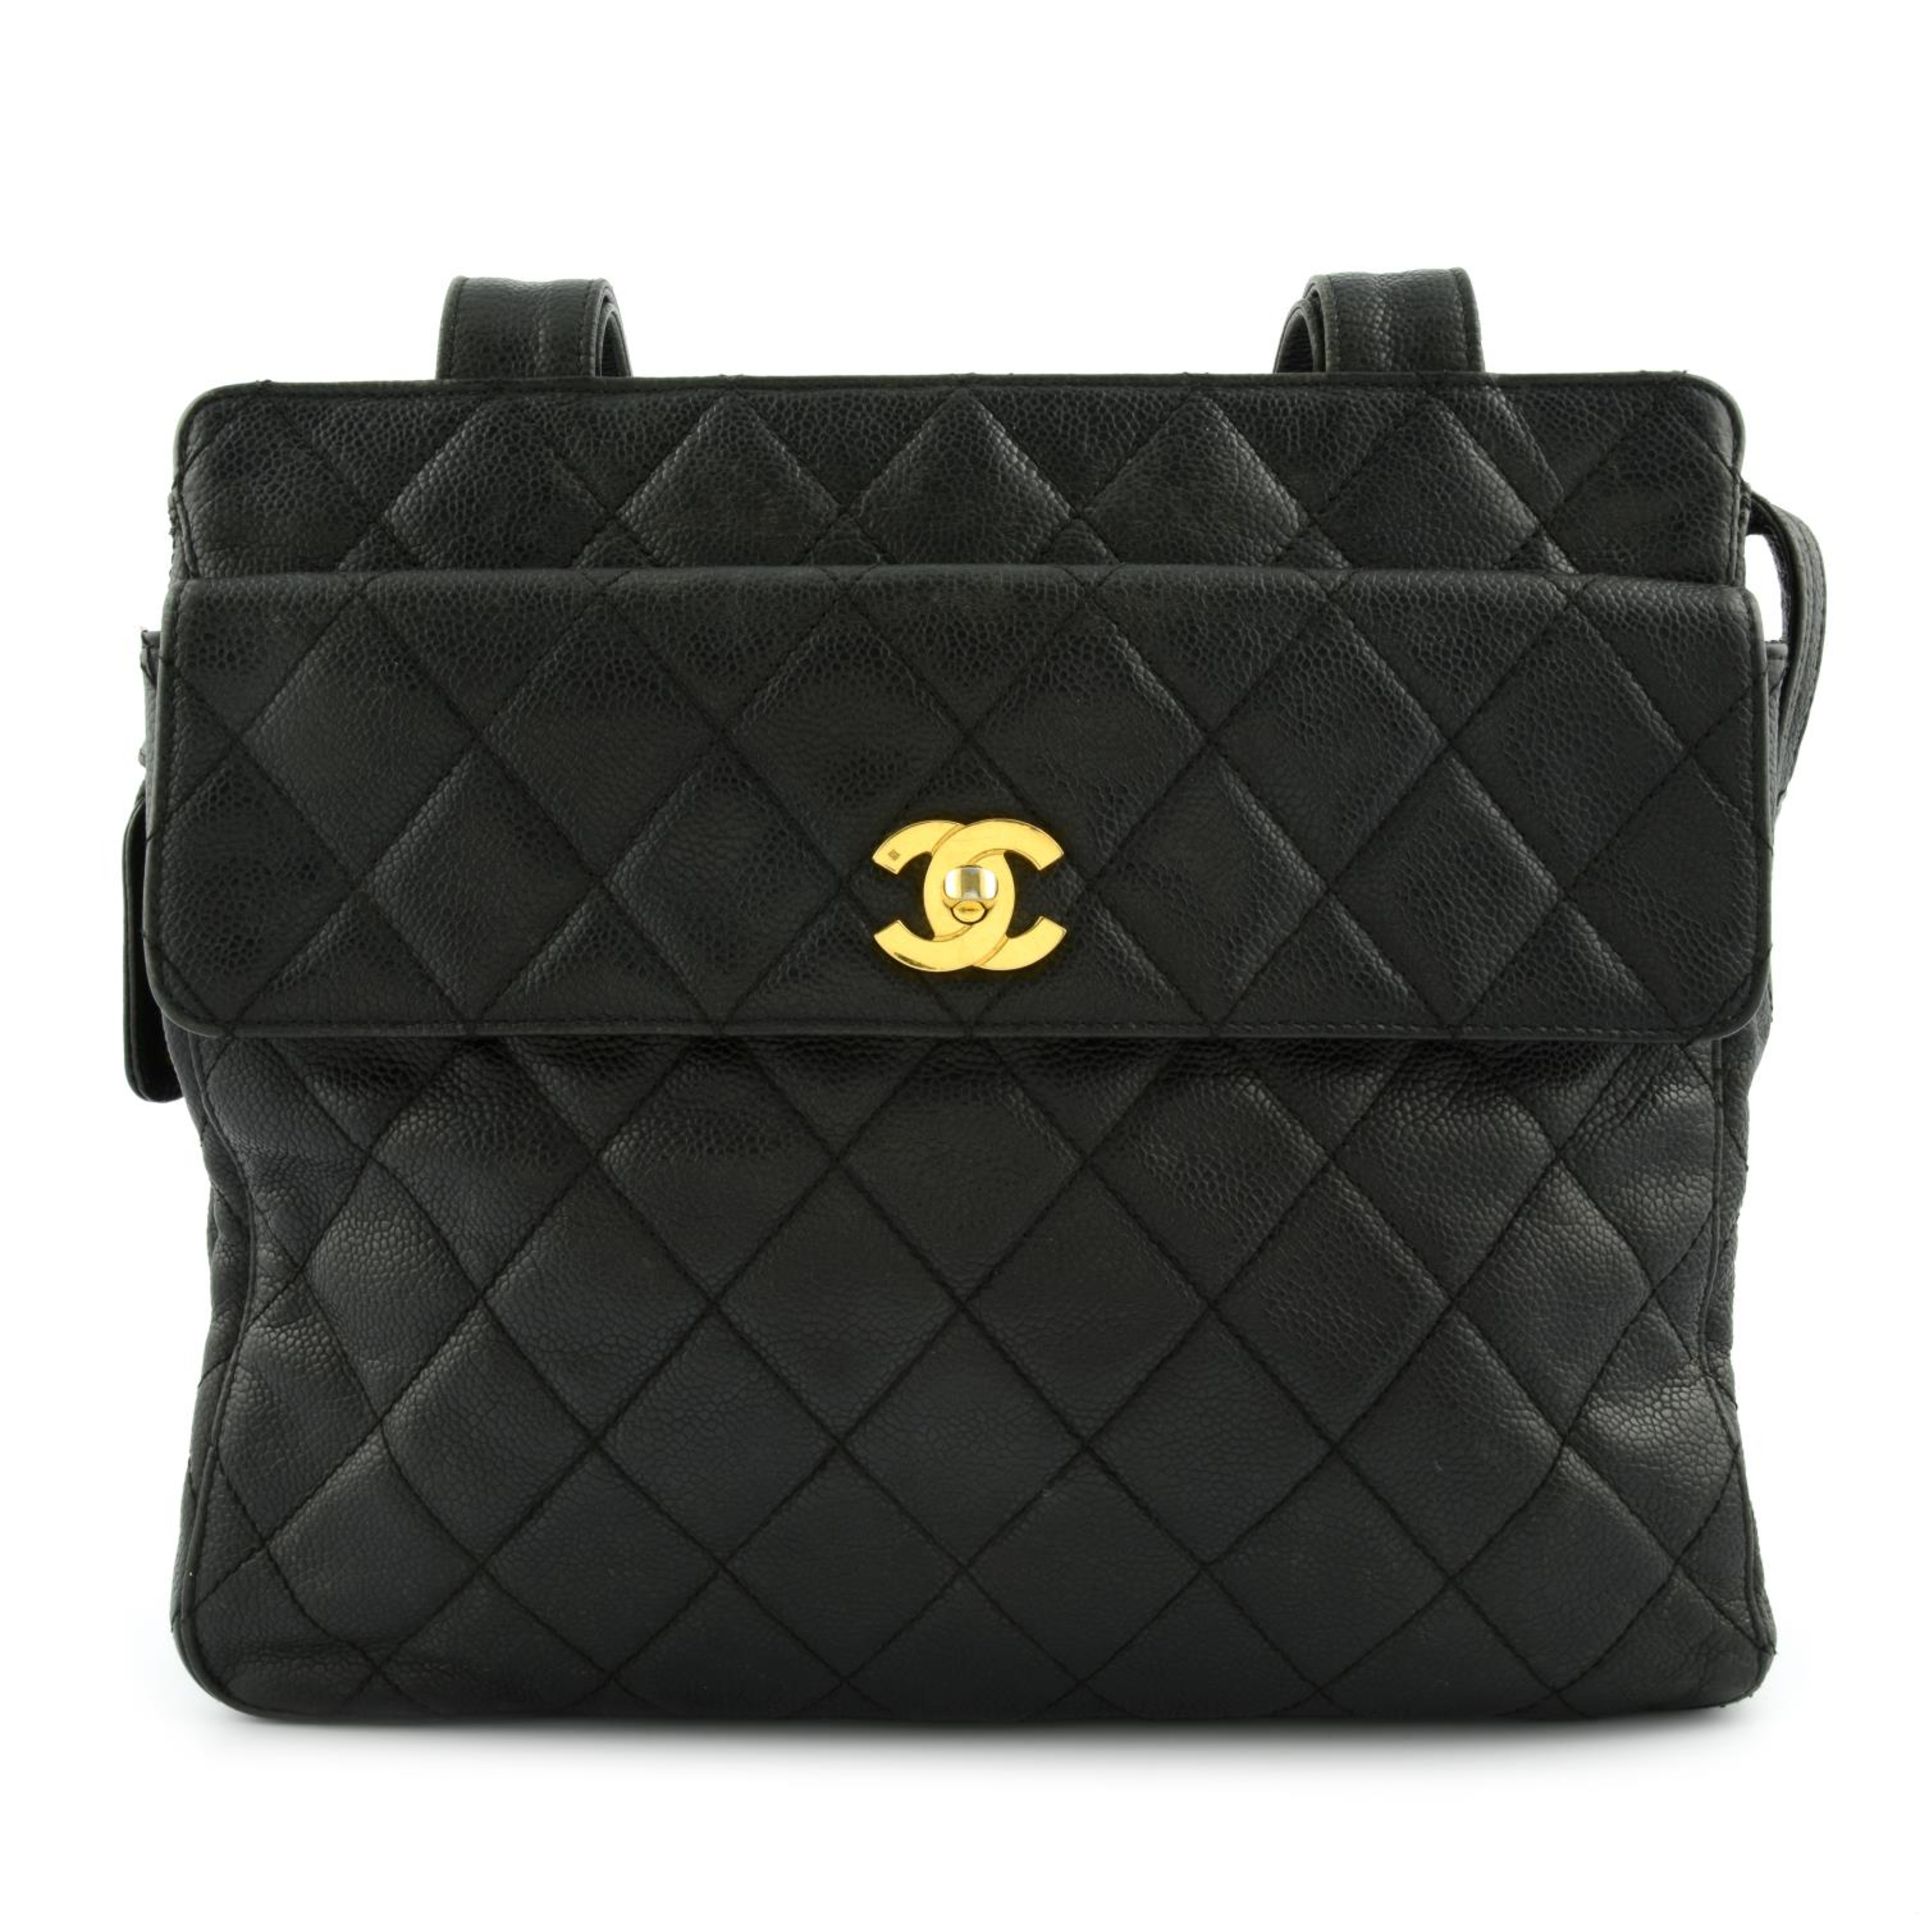 CHANEL - a vintage black caviar leather Petite Shopping Tote handbag.